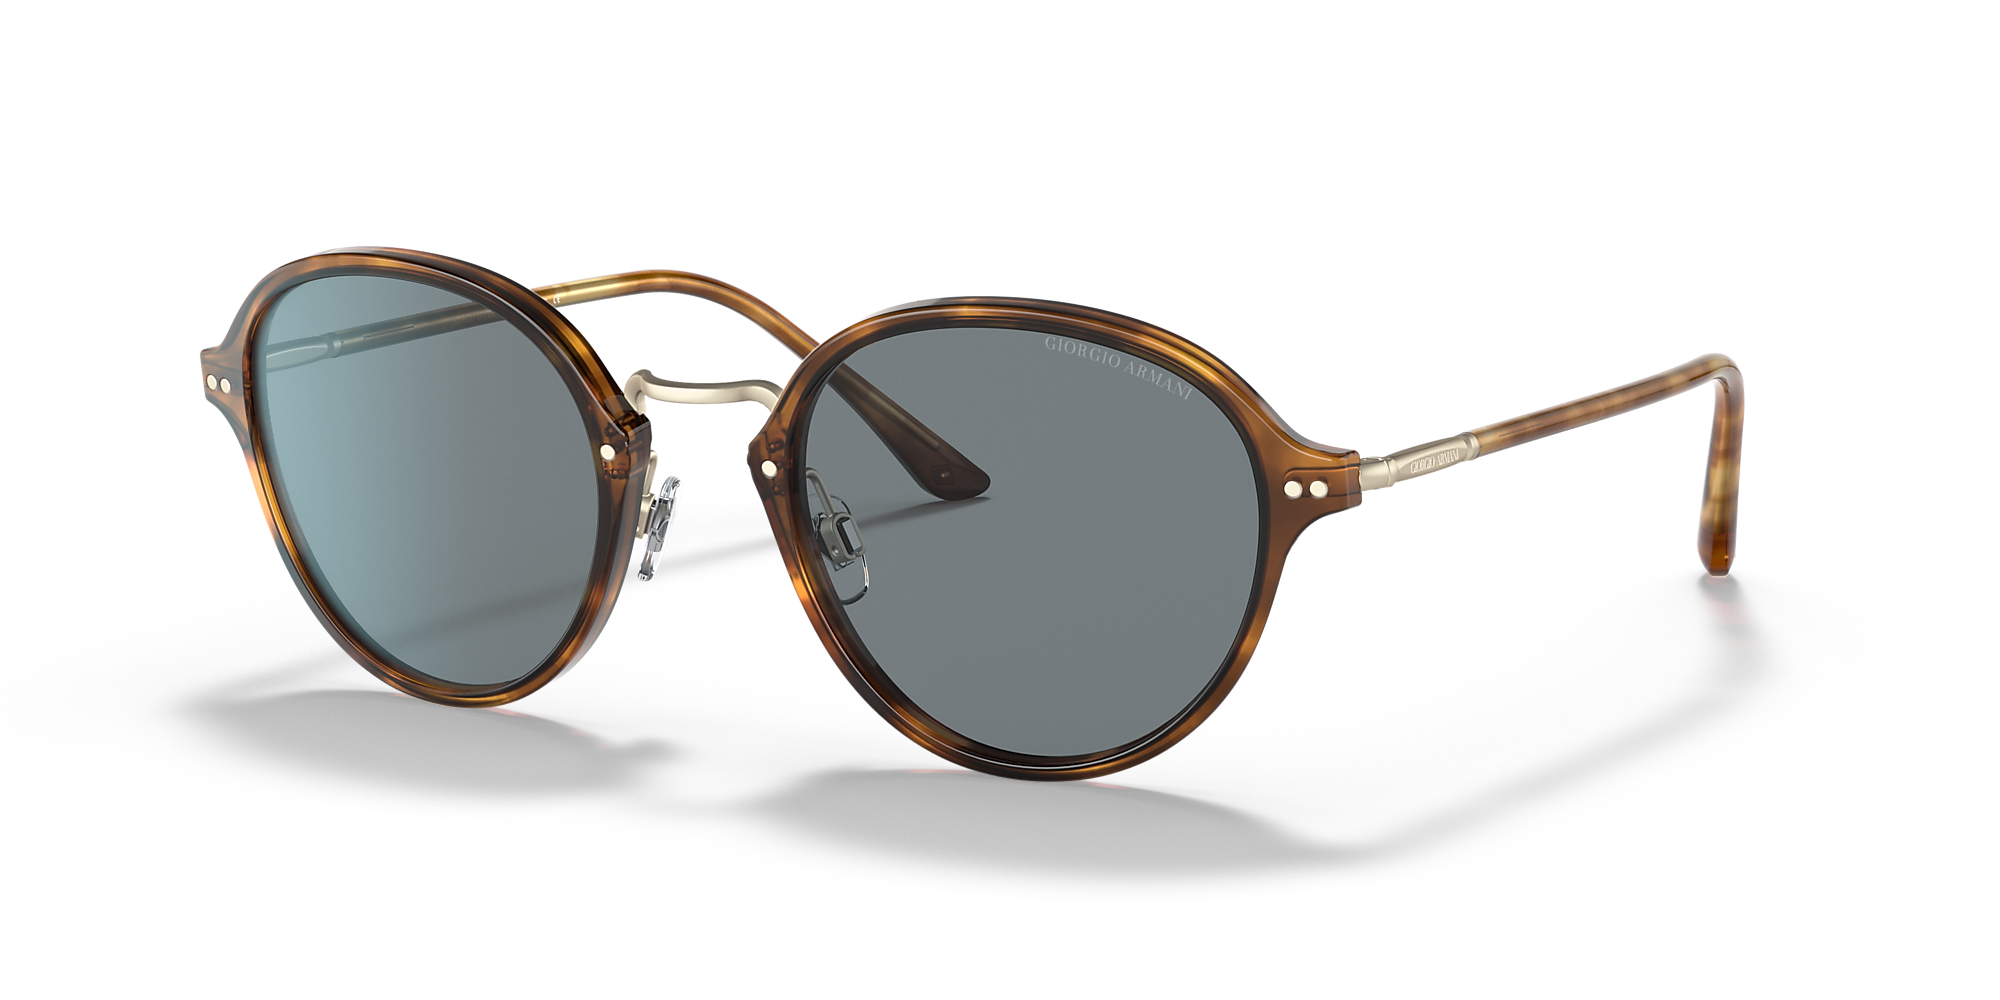 Giorgio Armani AR8139 51 Blue & Brown Tortoise Sunglasses | Sunglass ...